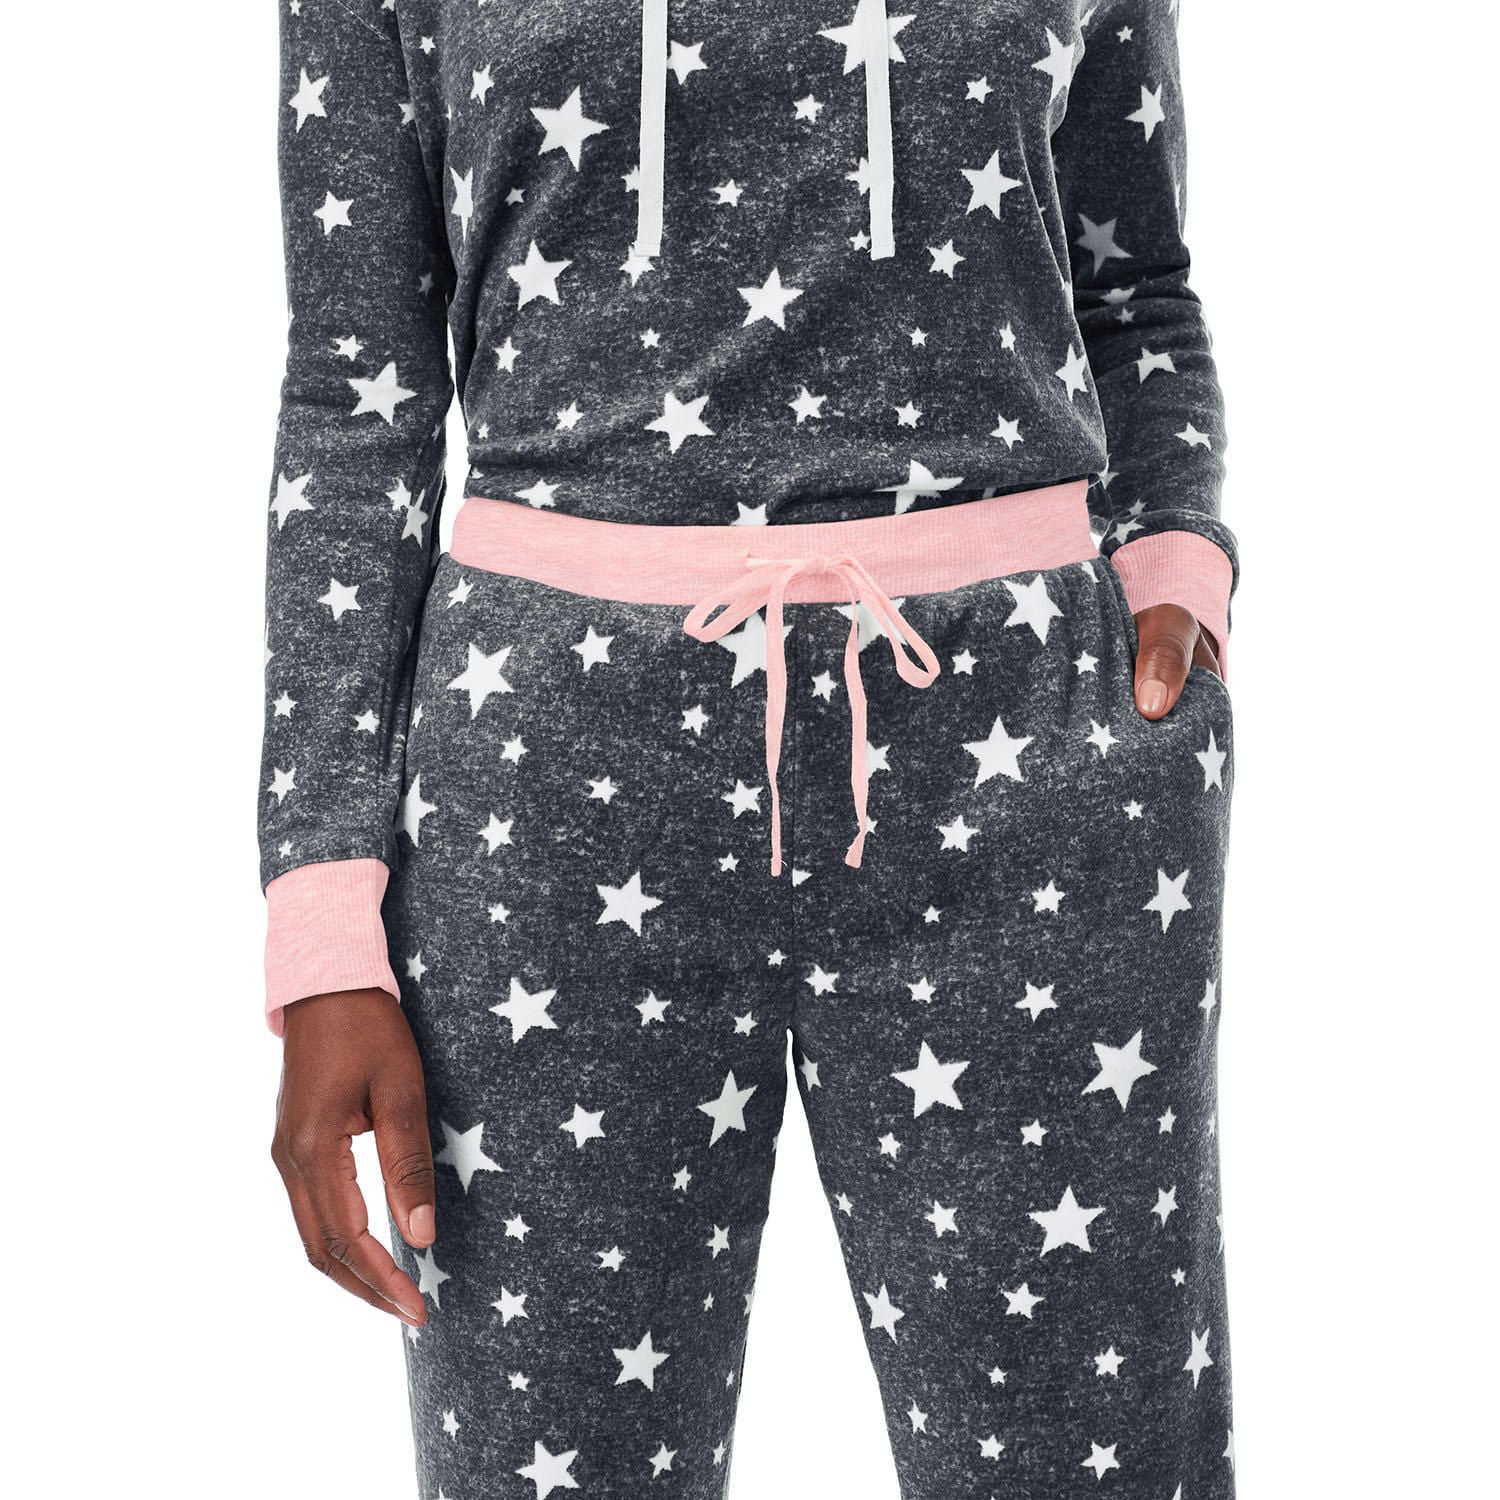 2-Piece Kyra Maternity Loungewear/Sleepwear PJ set - Charcoal